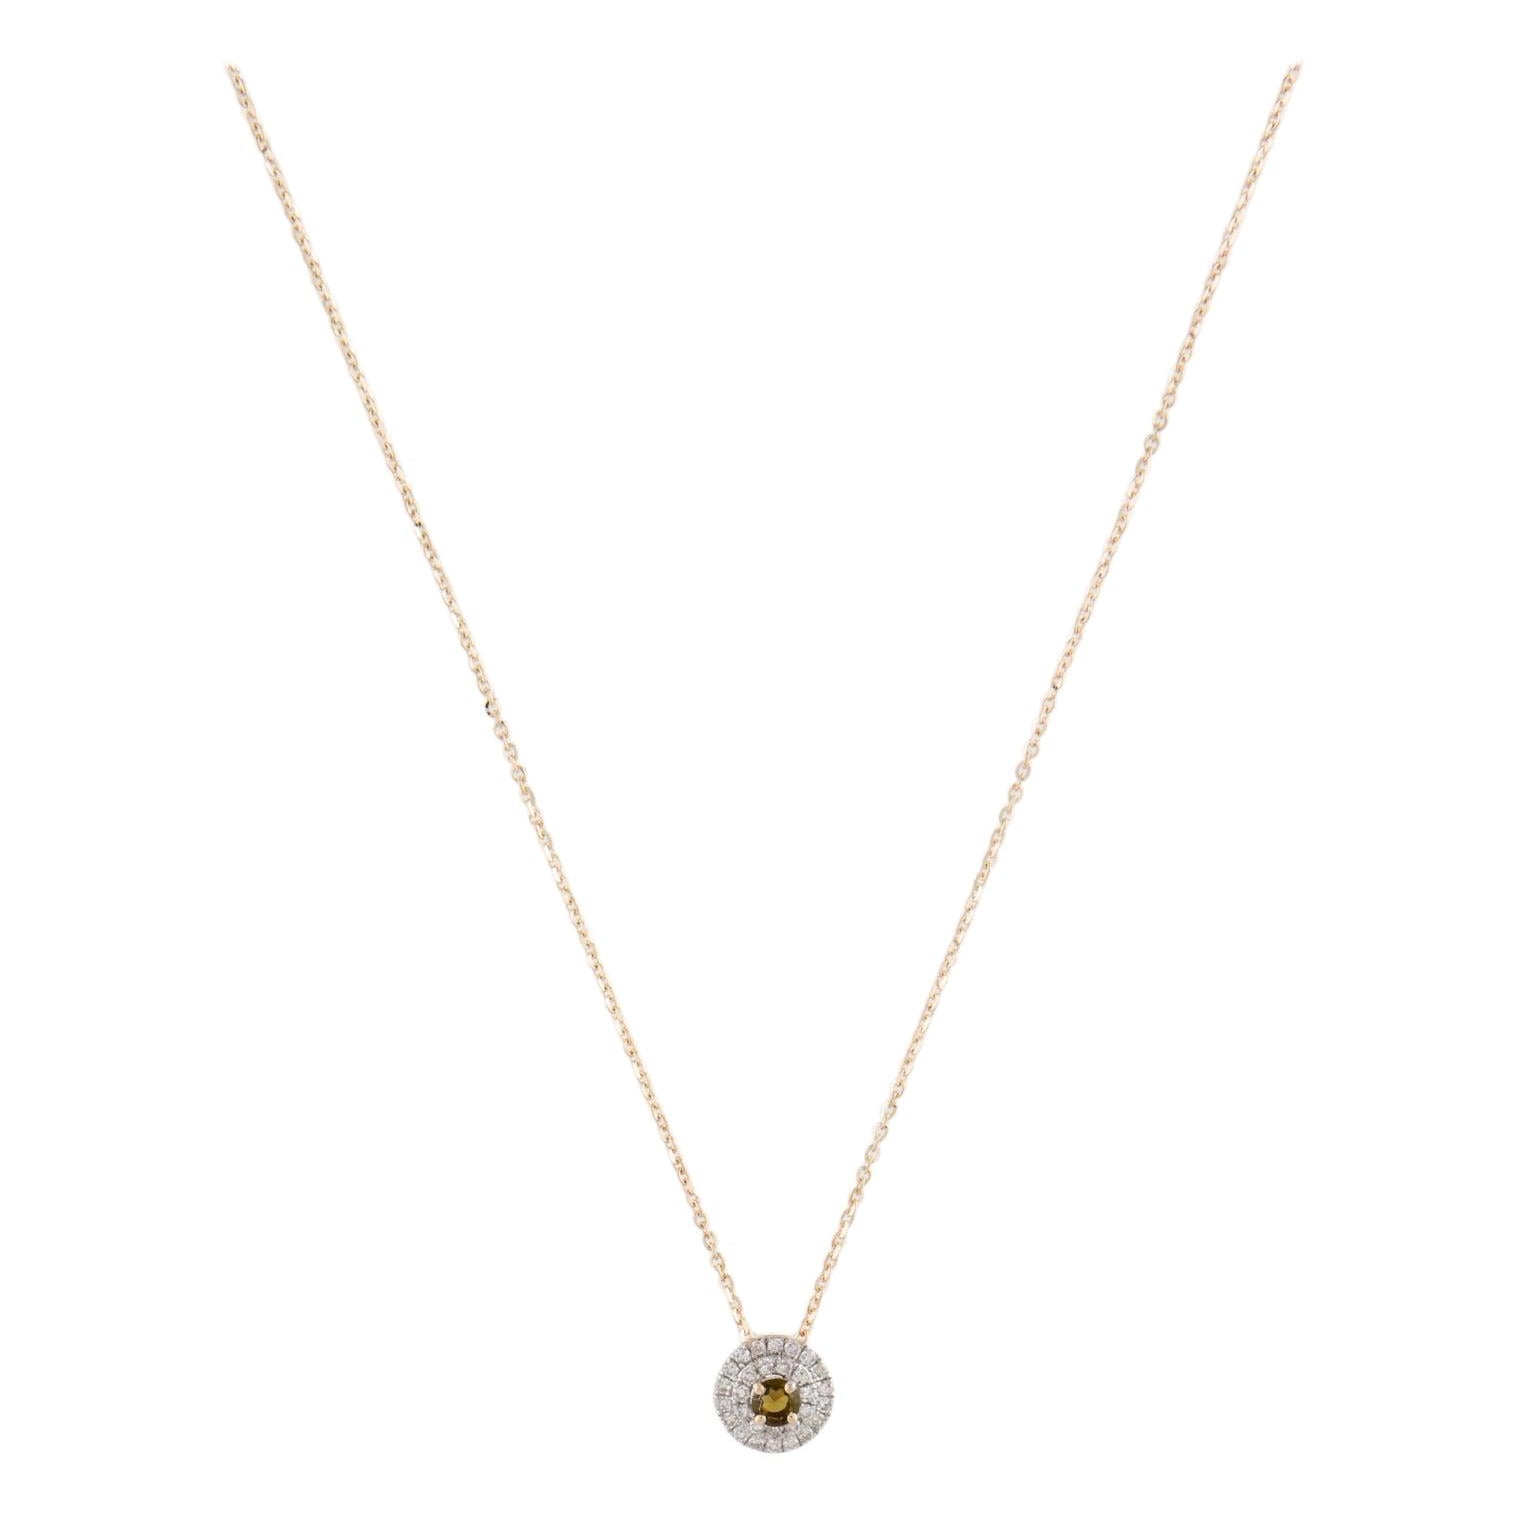 Exquisite 14K Tourmaline & Diamond Pendant Necklace: Timeless Elegance, Luxury